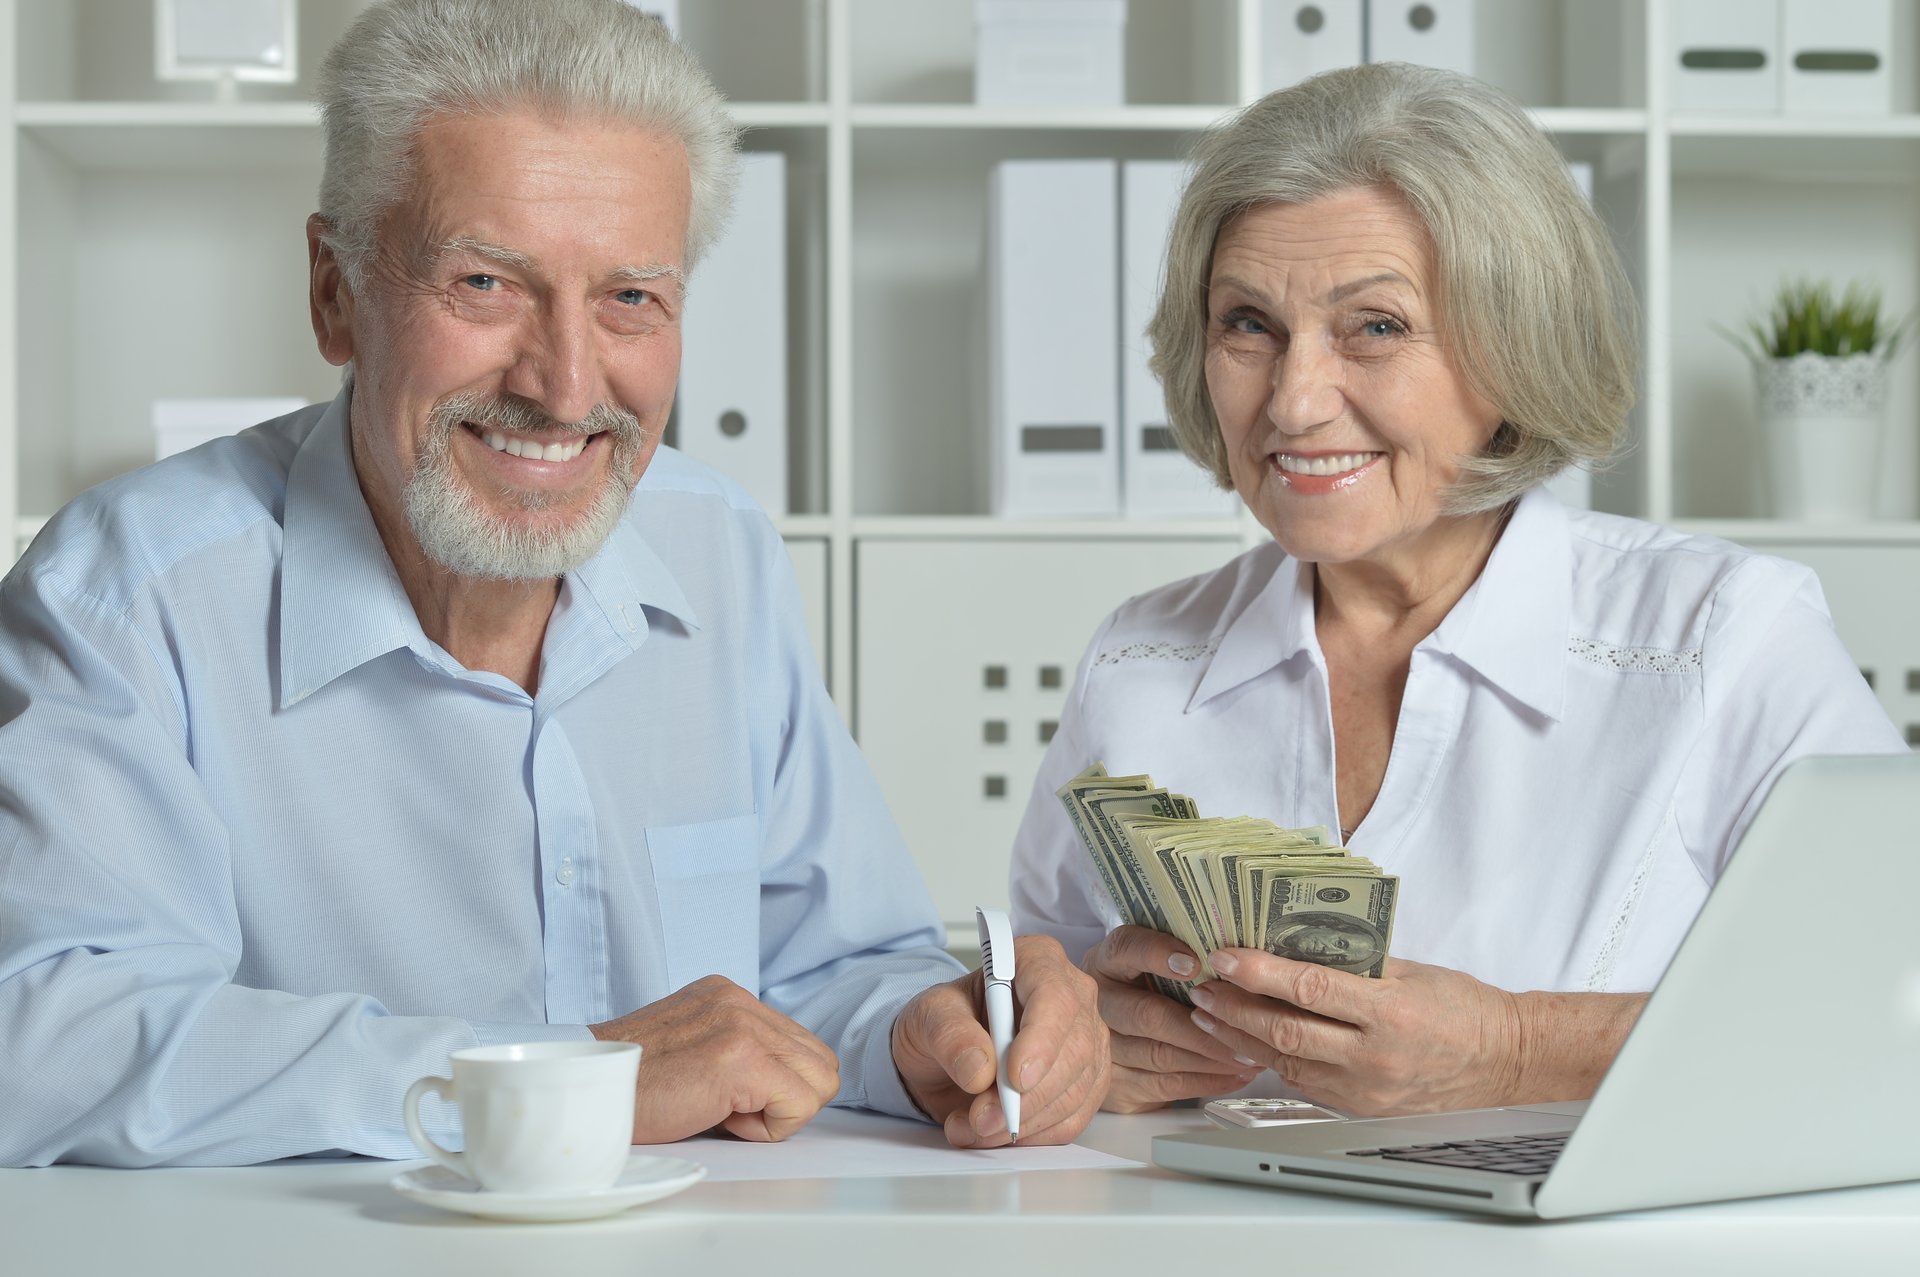 A senior couple enjoys their retirement savings